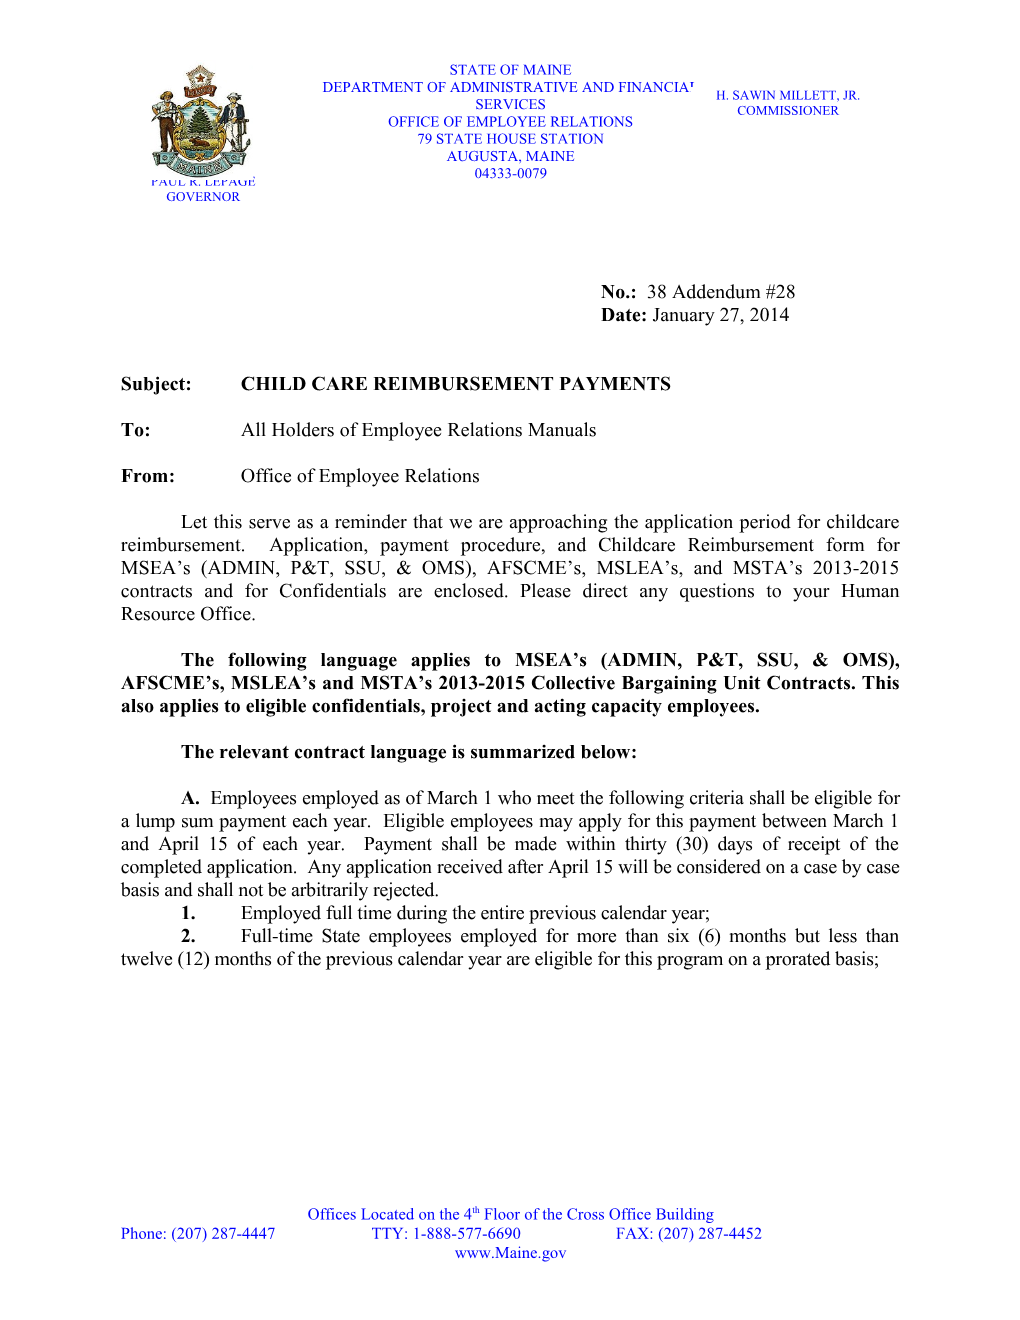 Subject: CHILD CARE REIMBURSEMENT PAYMENTS s1